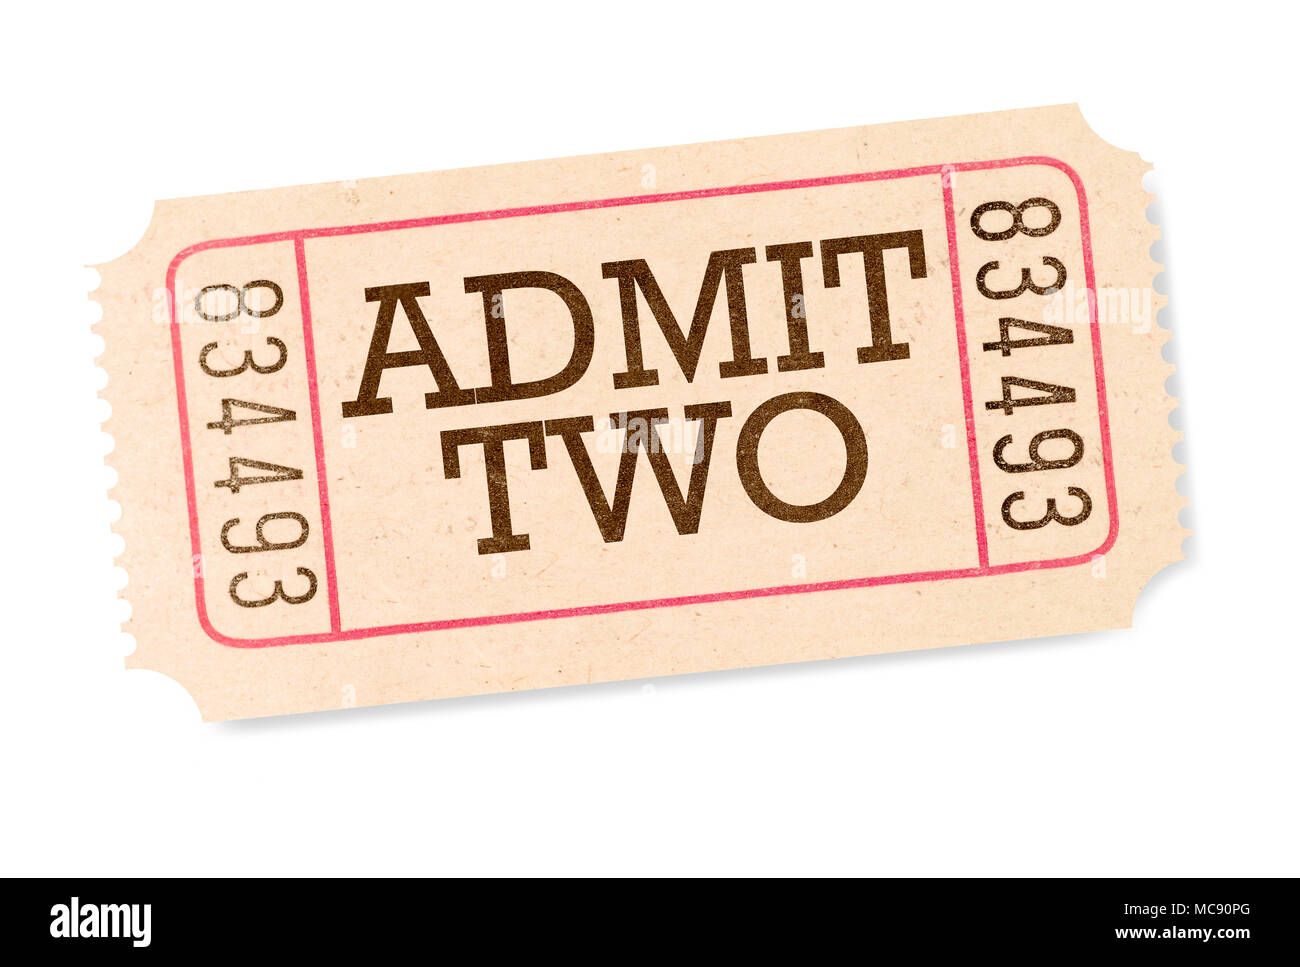 Admit two movie ticket Stock Photo